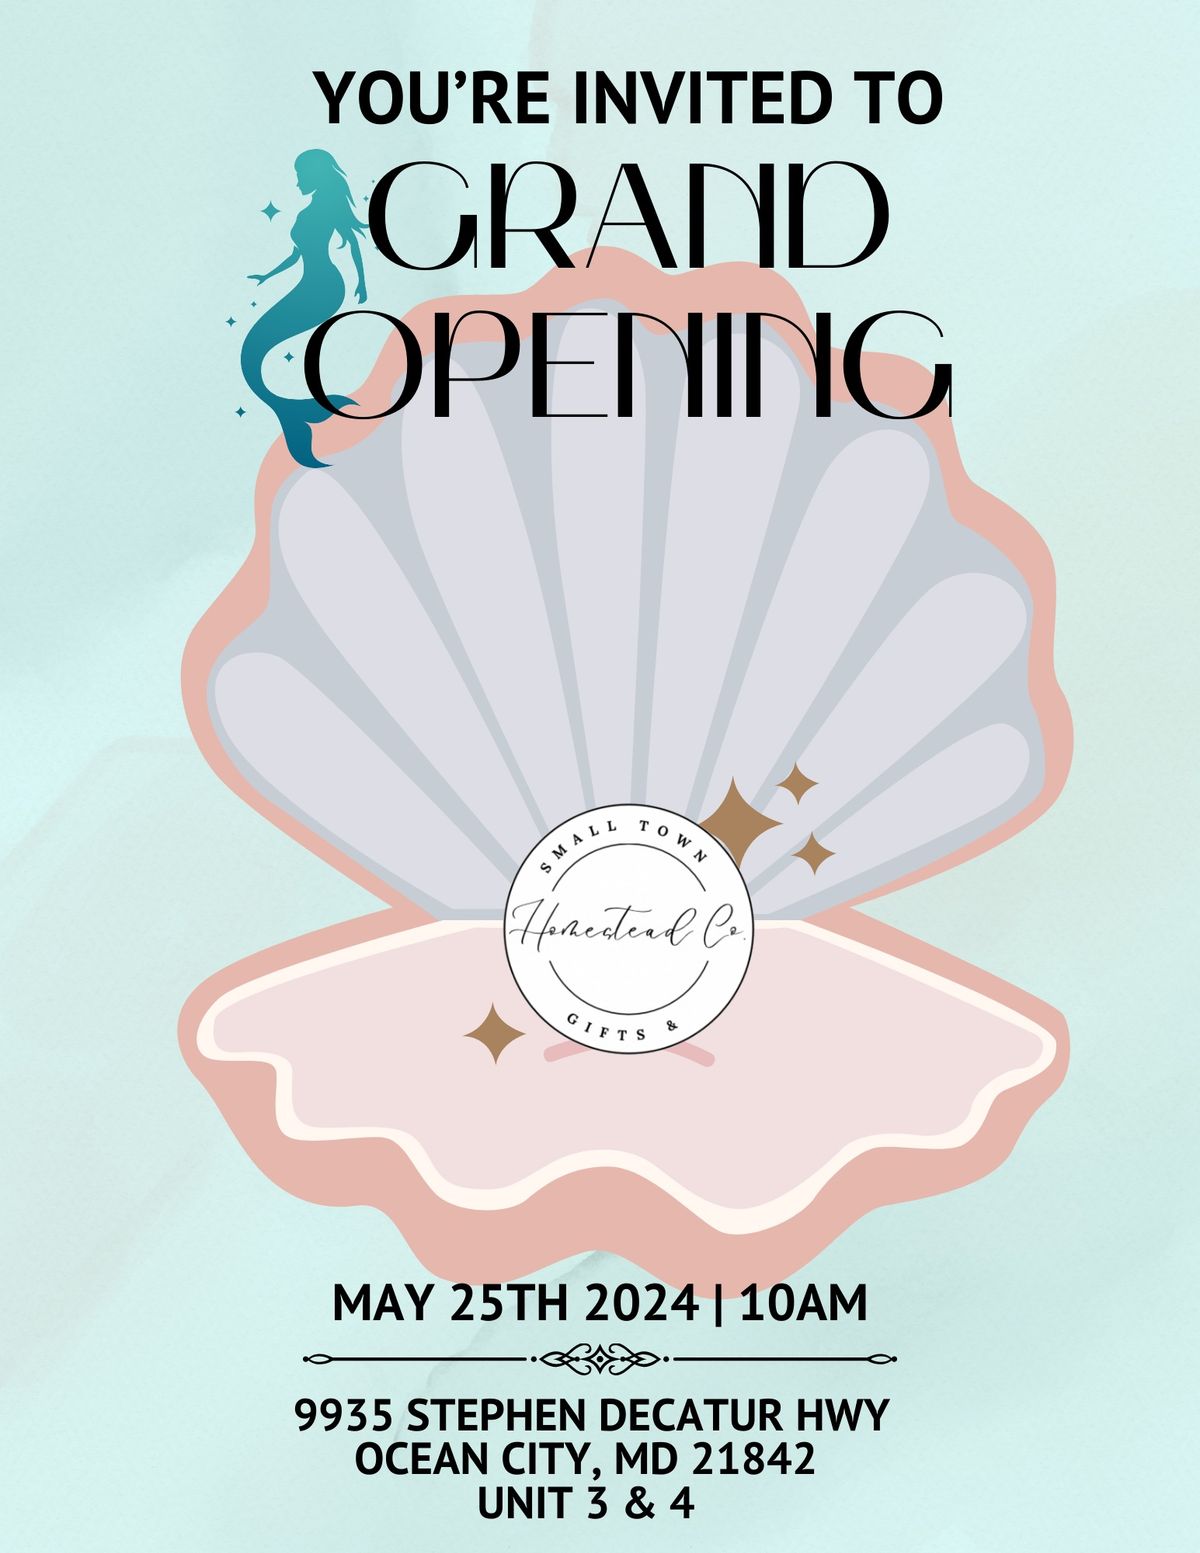 Grand Opening 